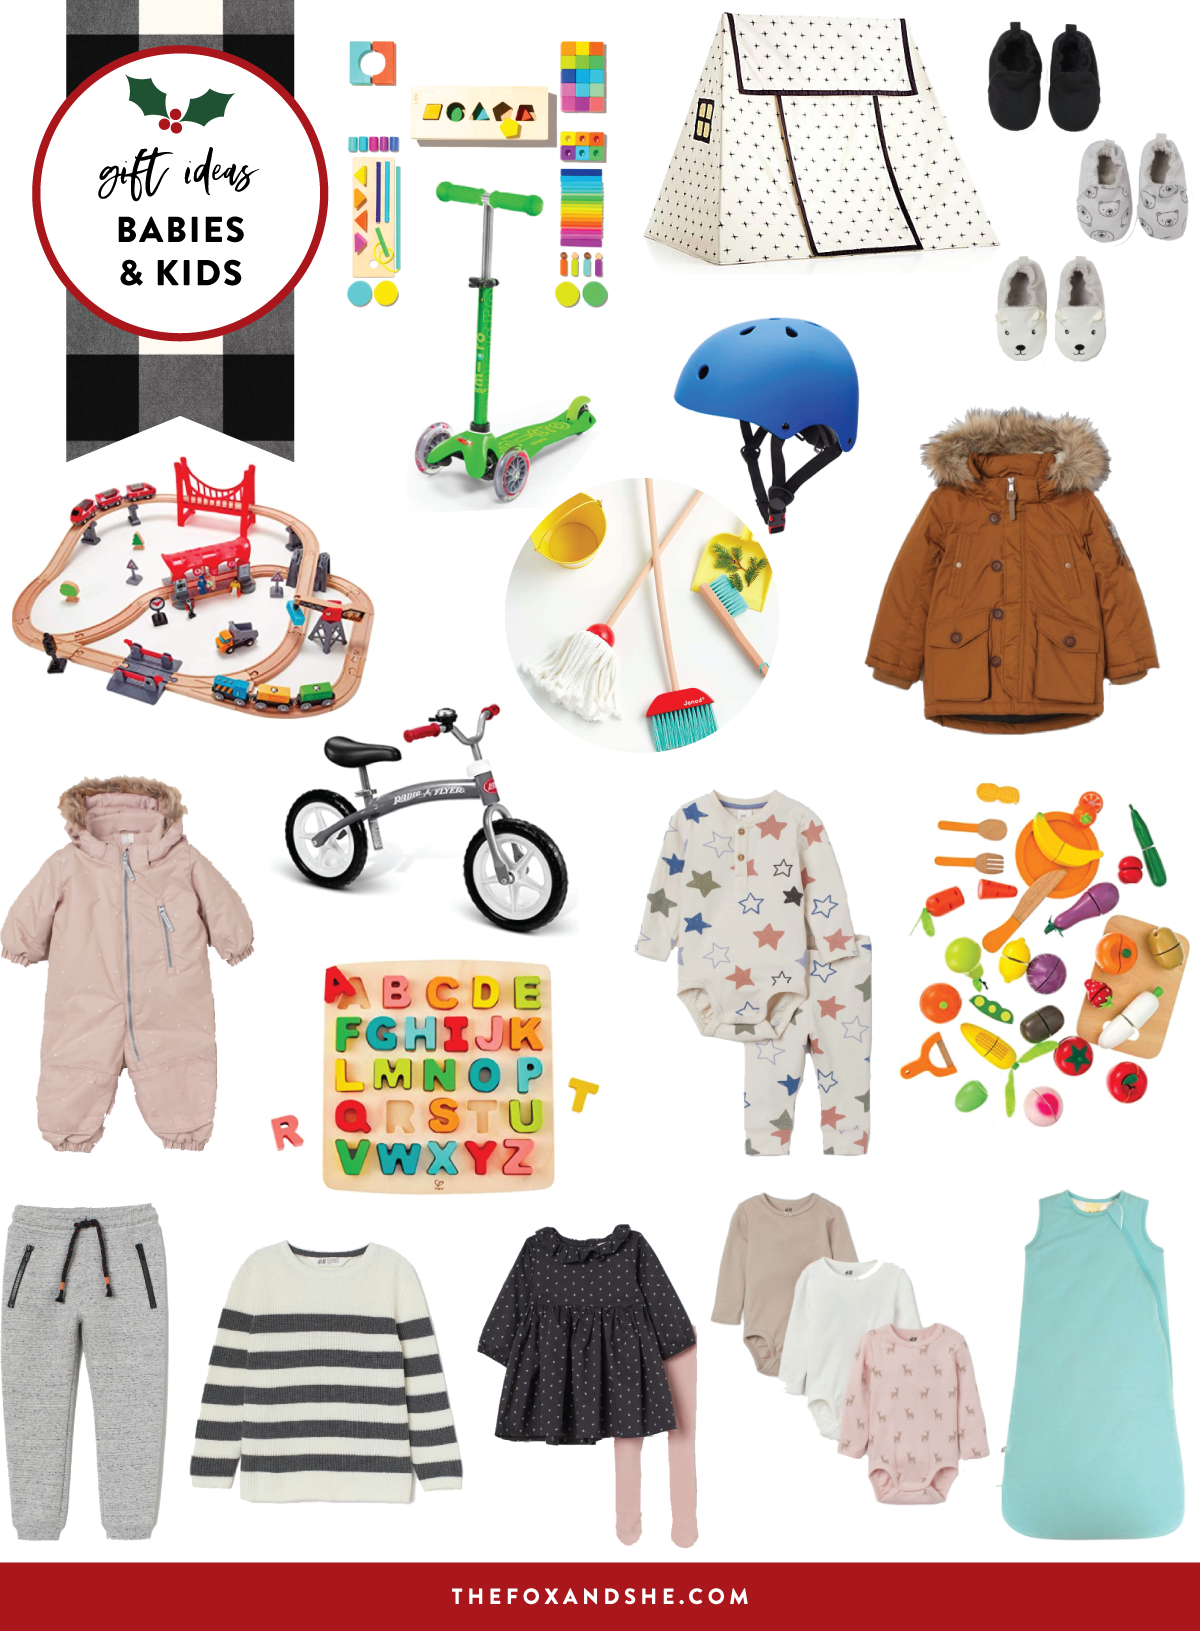 Gift Guide: Kids & Babies